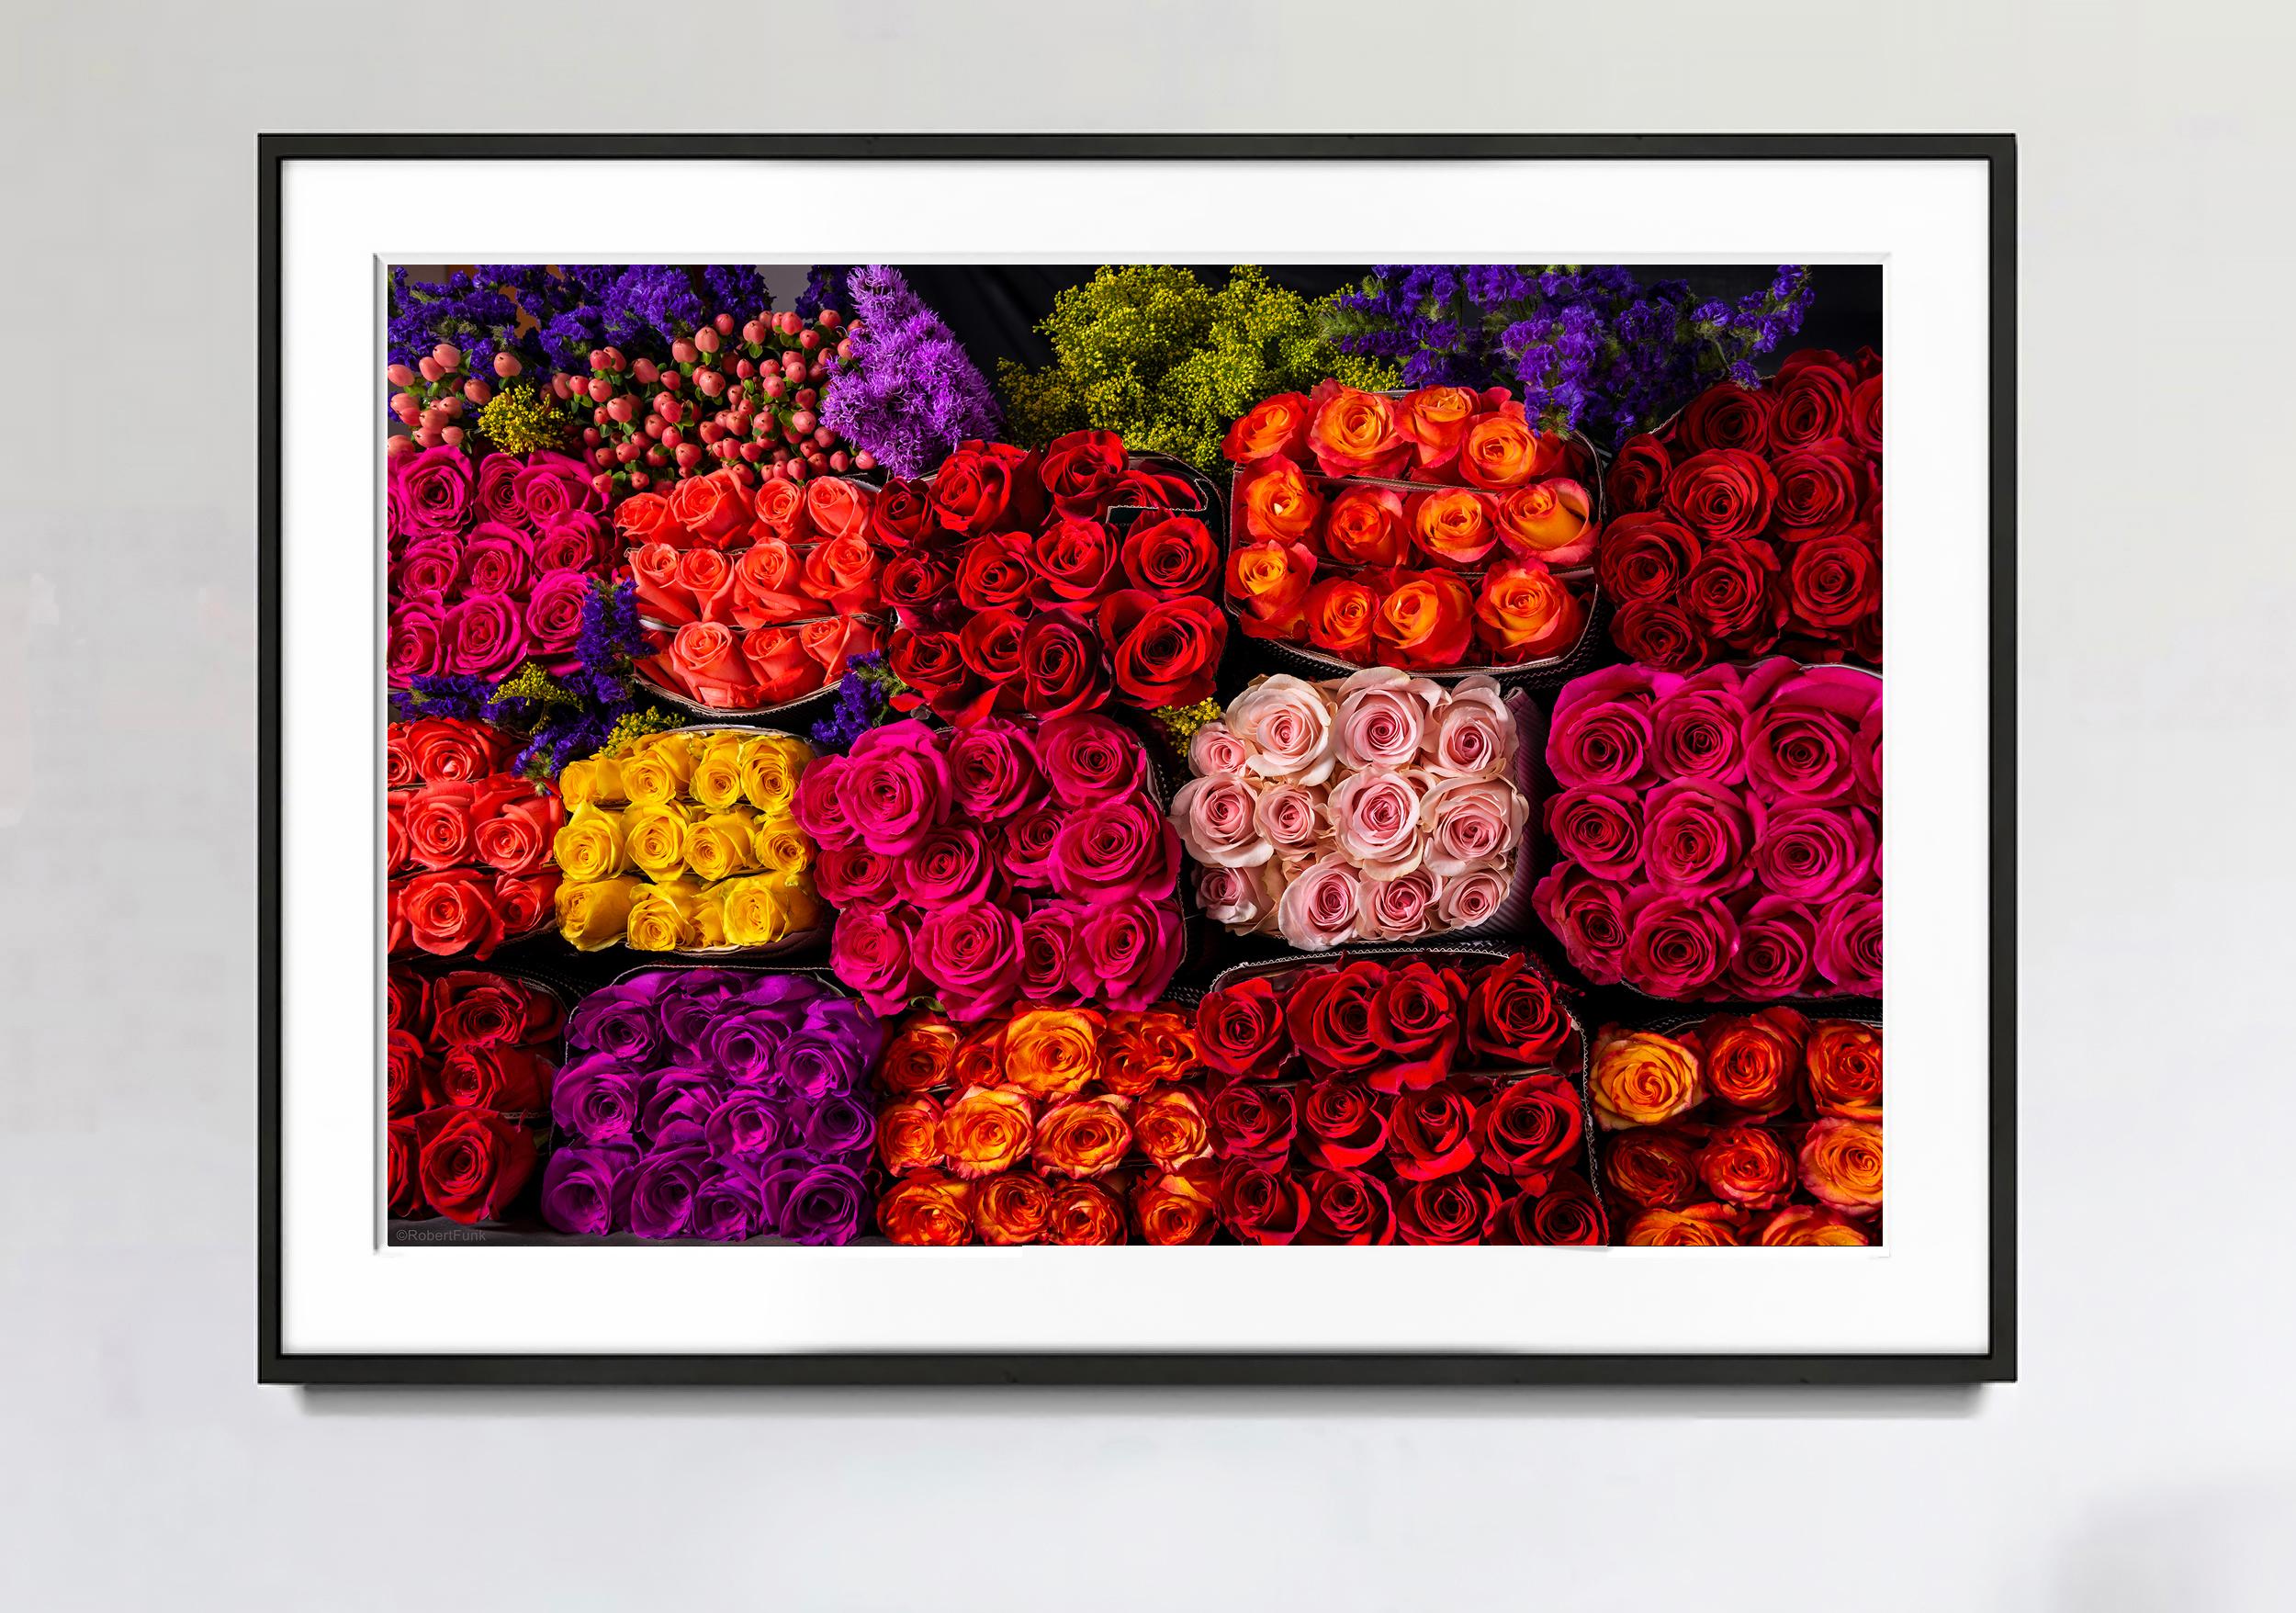 Robert Funk Color Photograph – Dreiundsechzig lila-rosa und rote Rosen,  Flower Power 